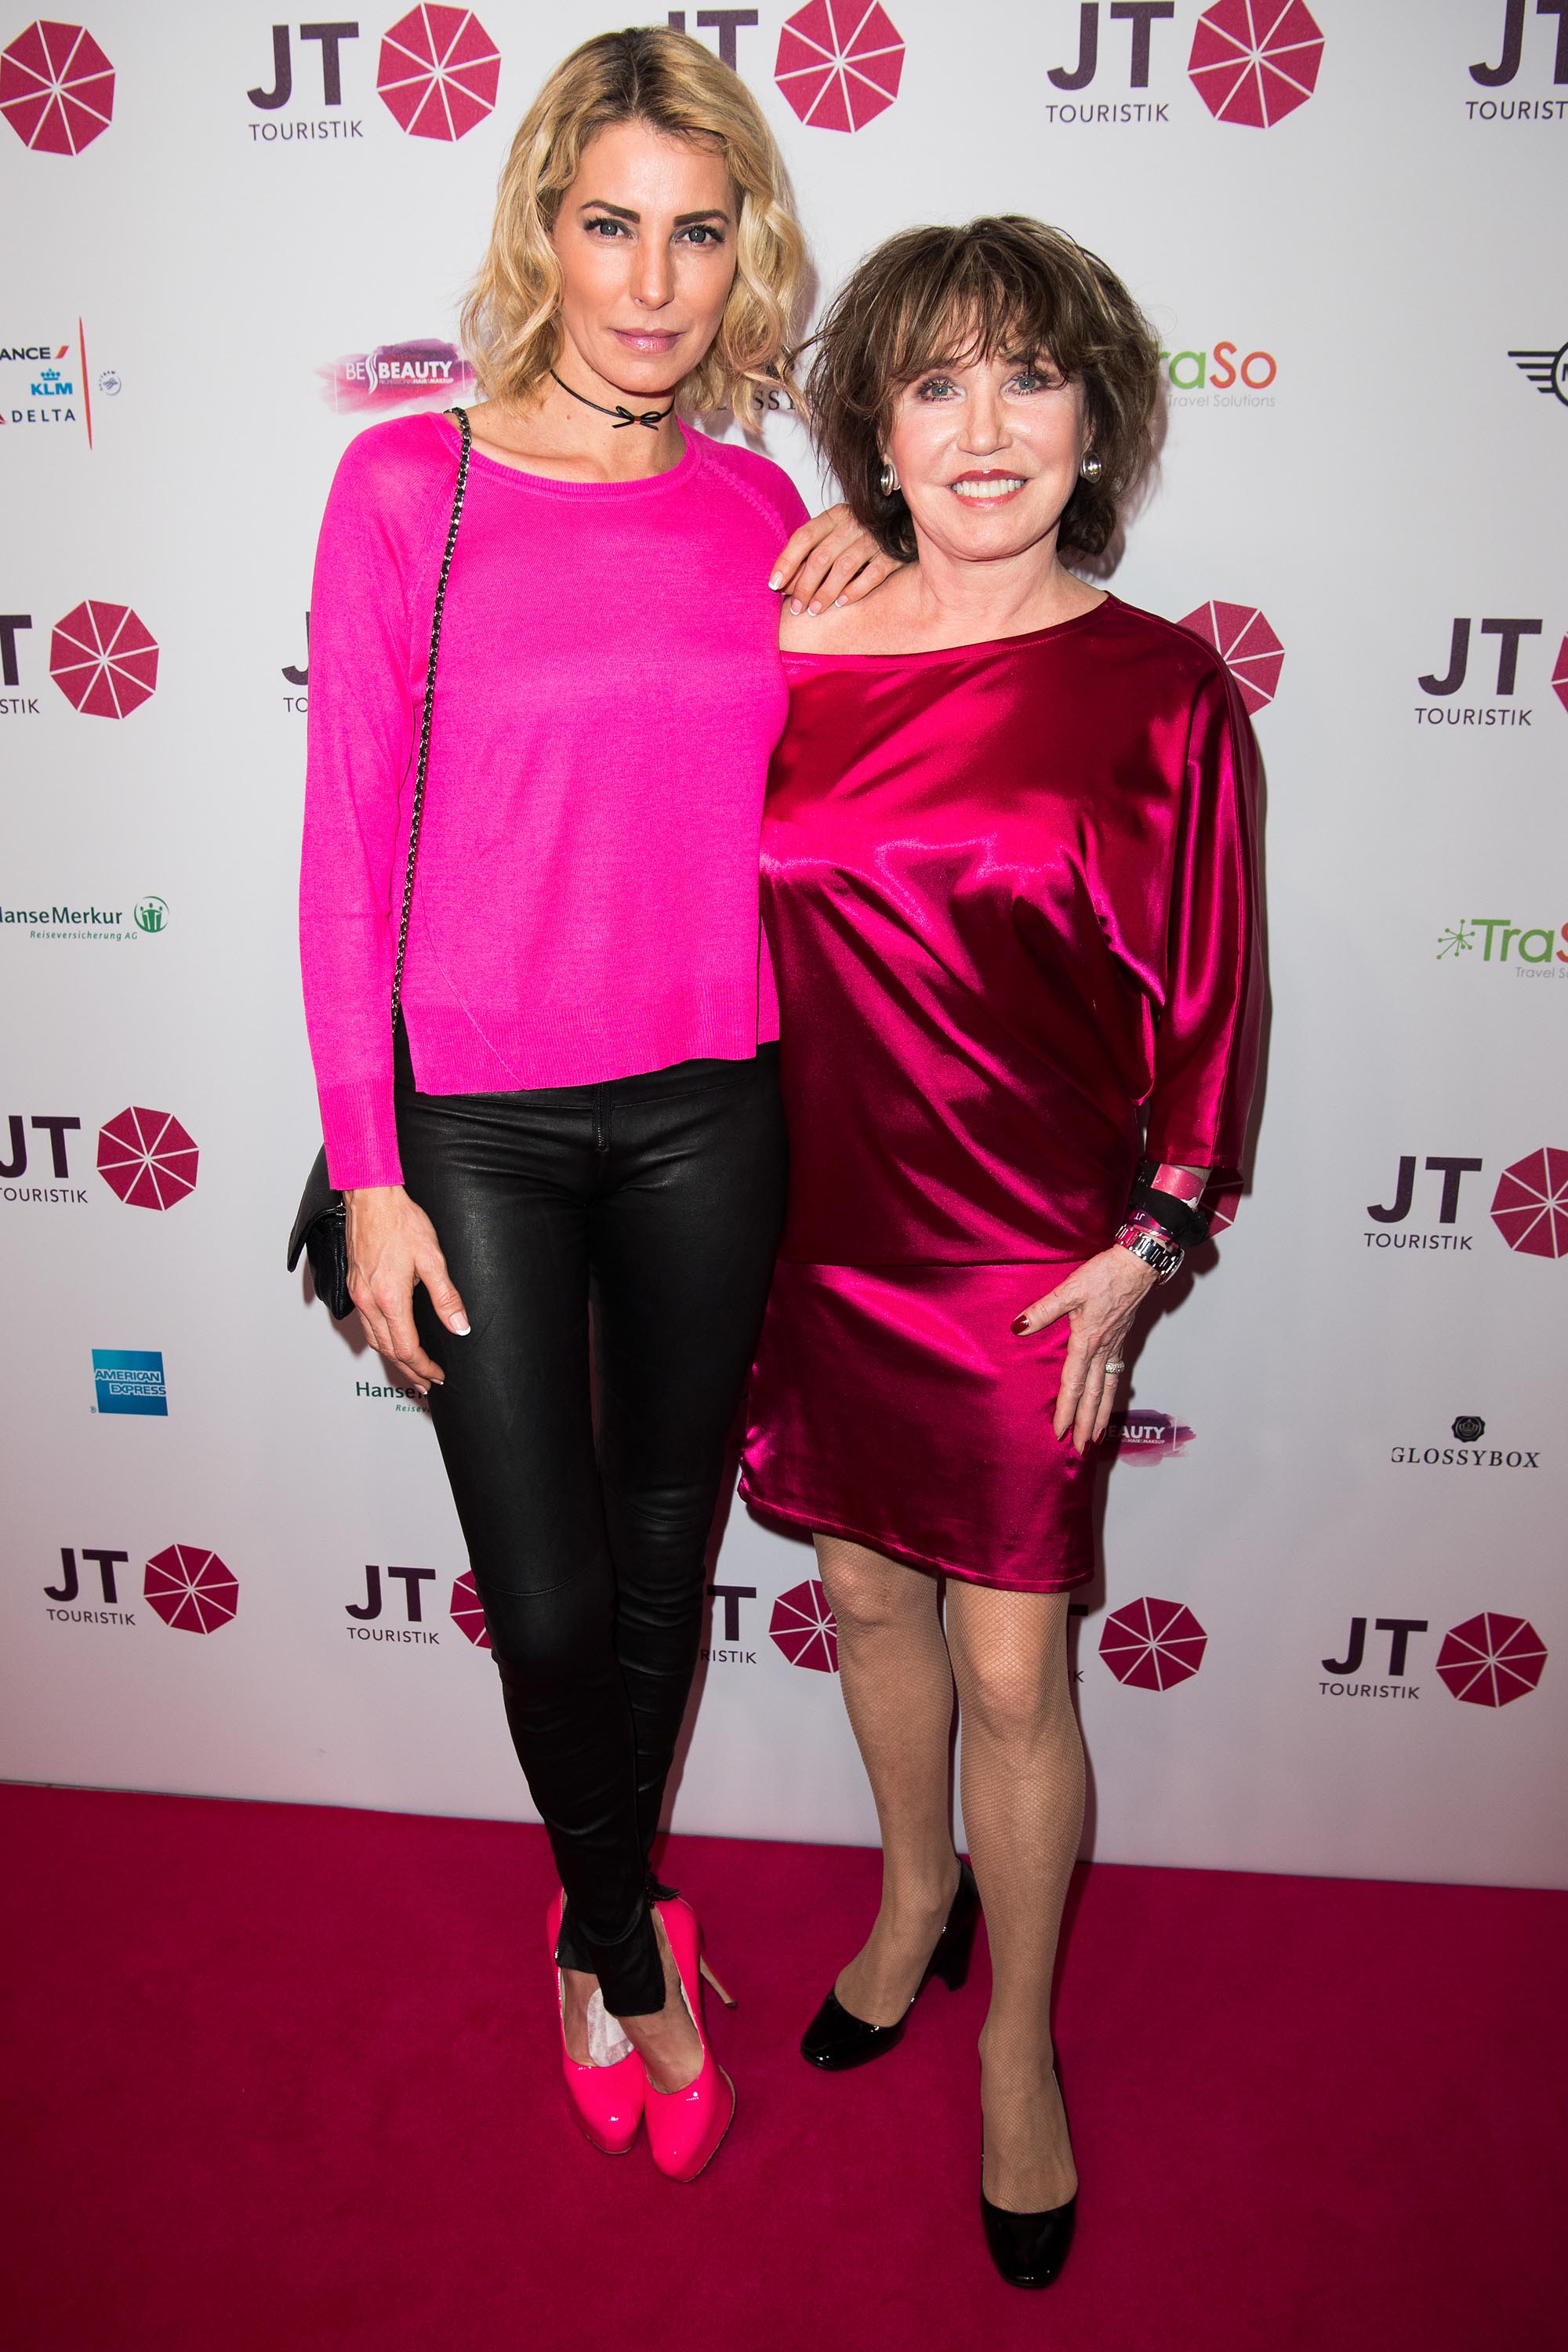 Giulia Siegel attends the JT Touristik party